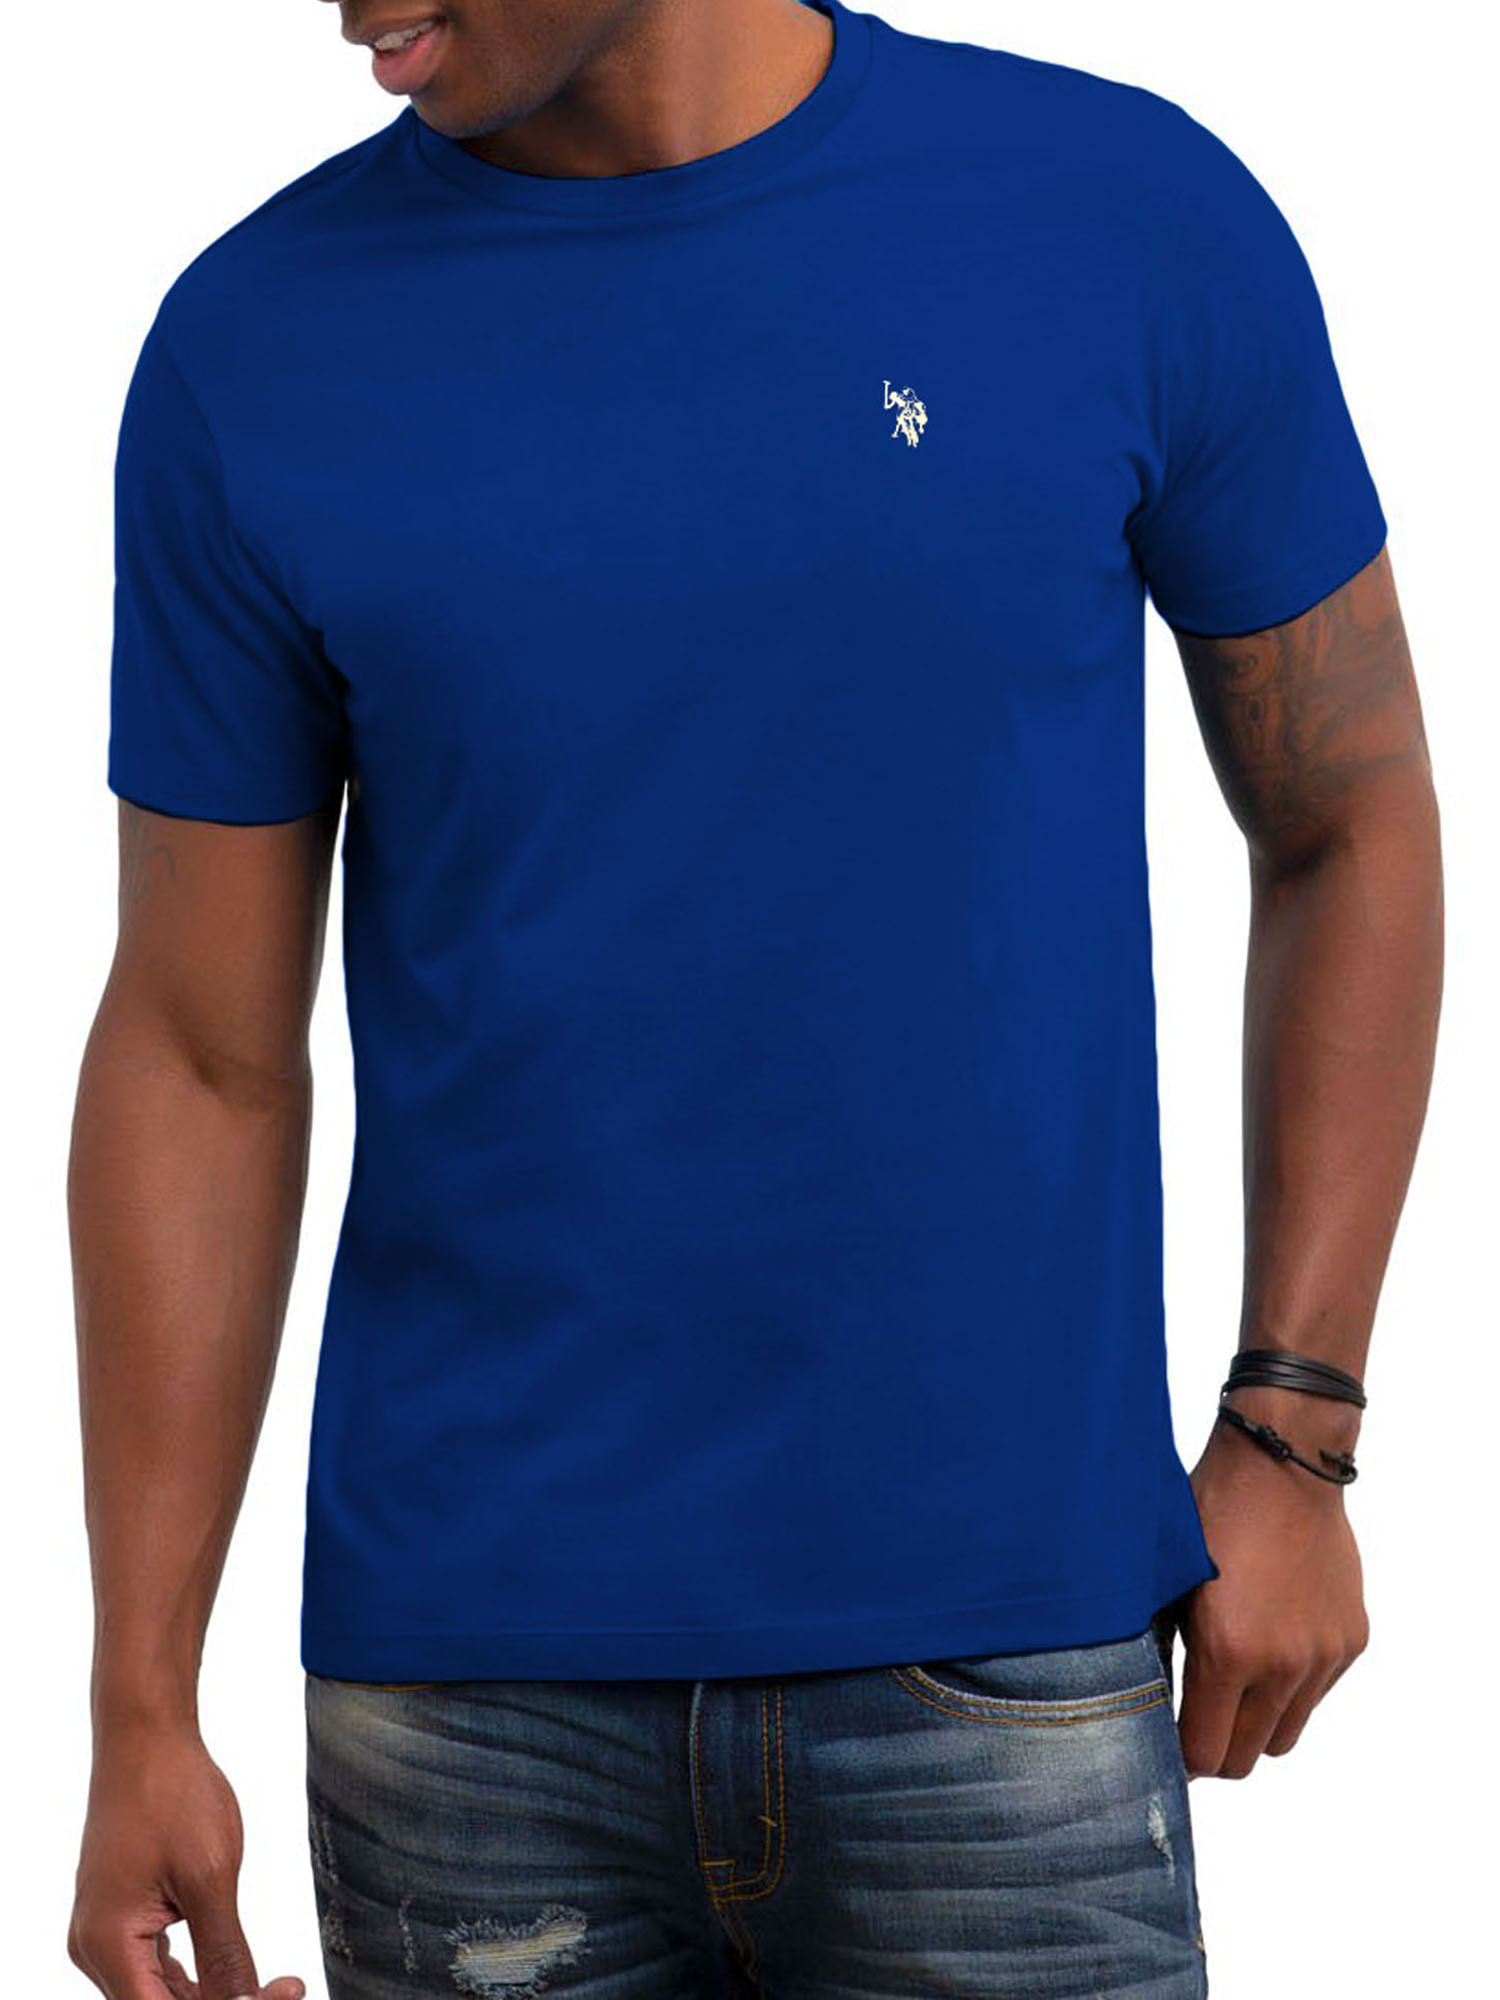 U.S. Polo Assn. Men's Crew Neck T-Shirt - image 1 of 1